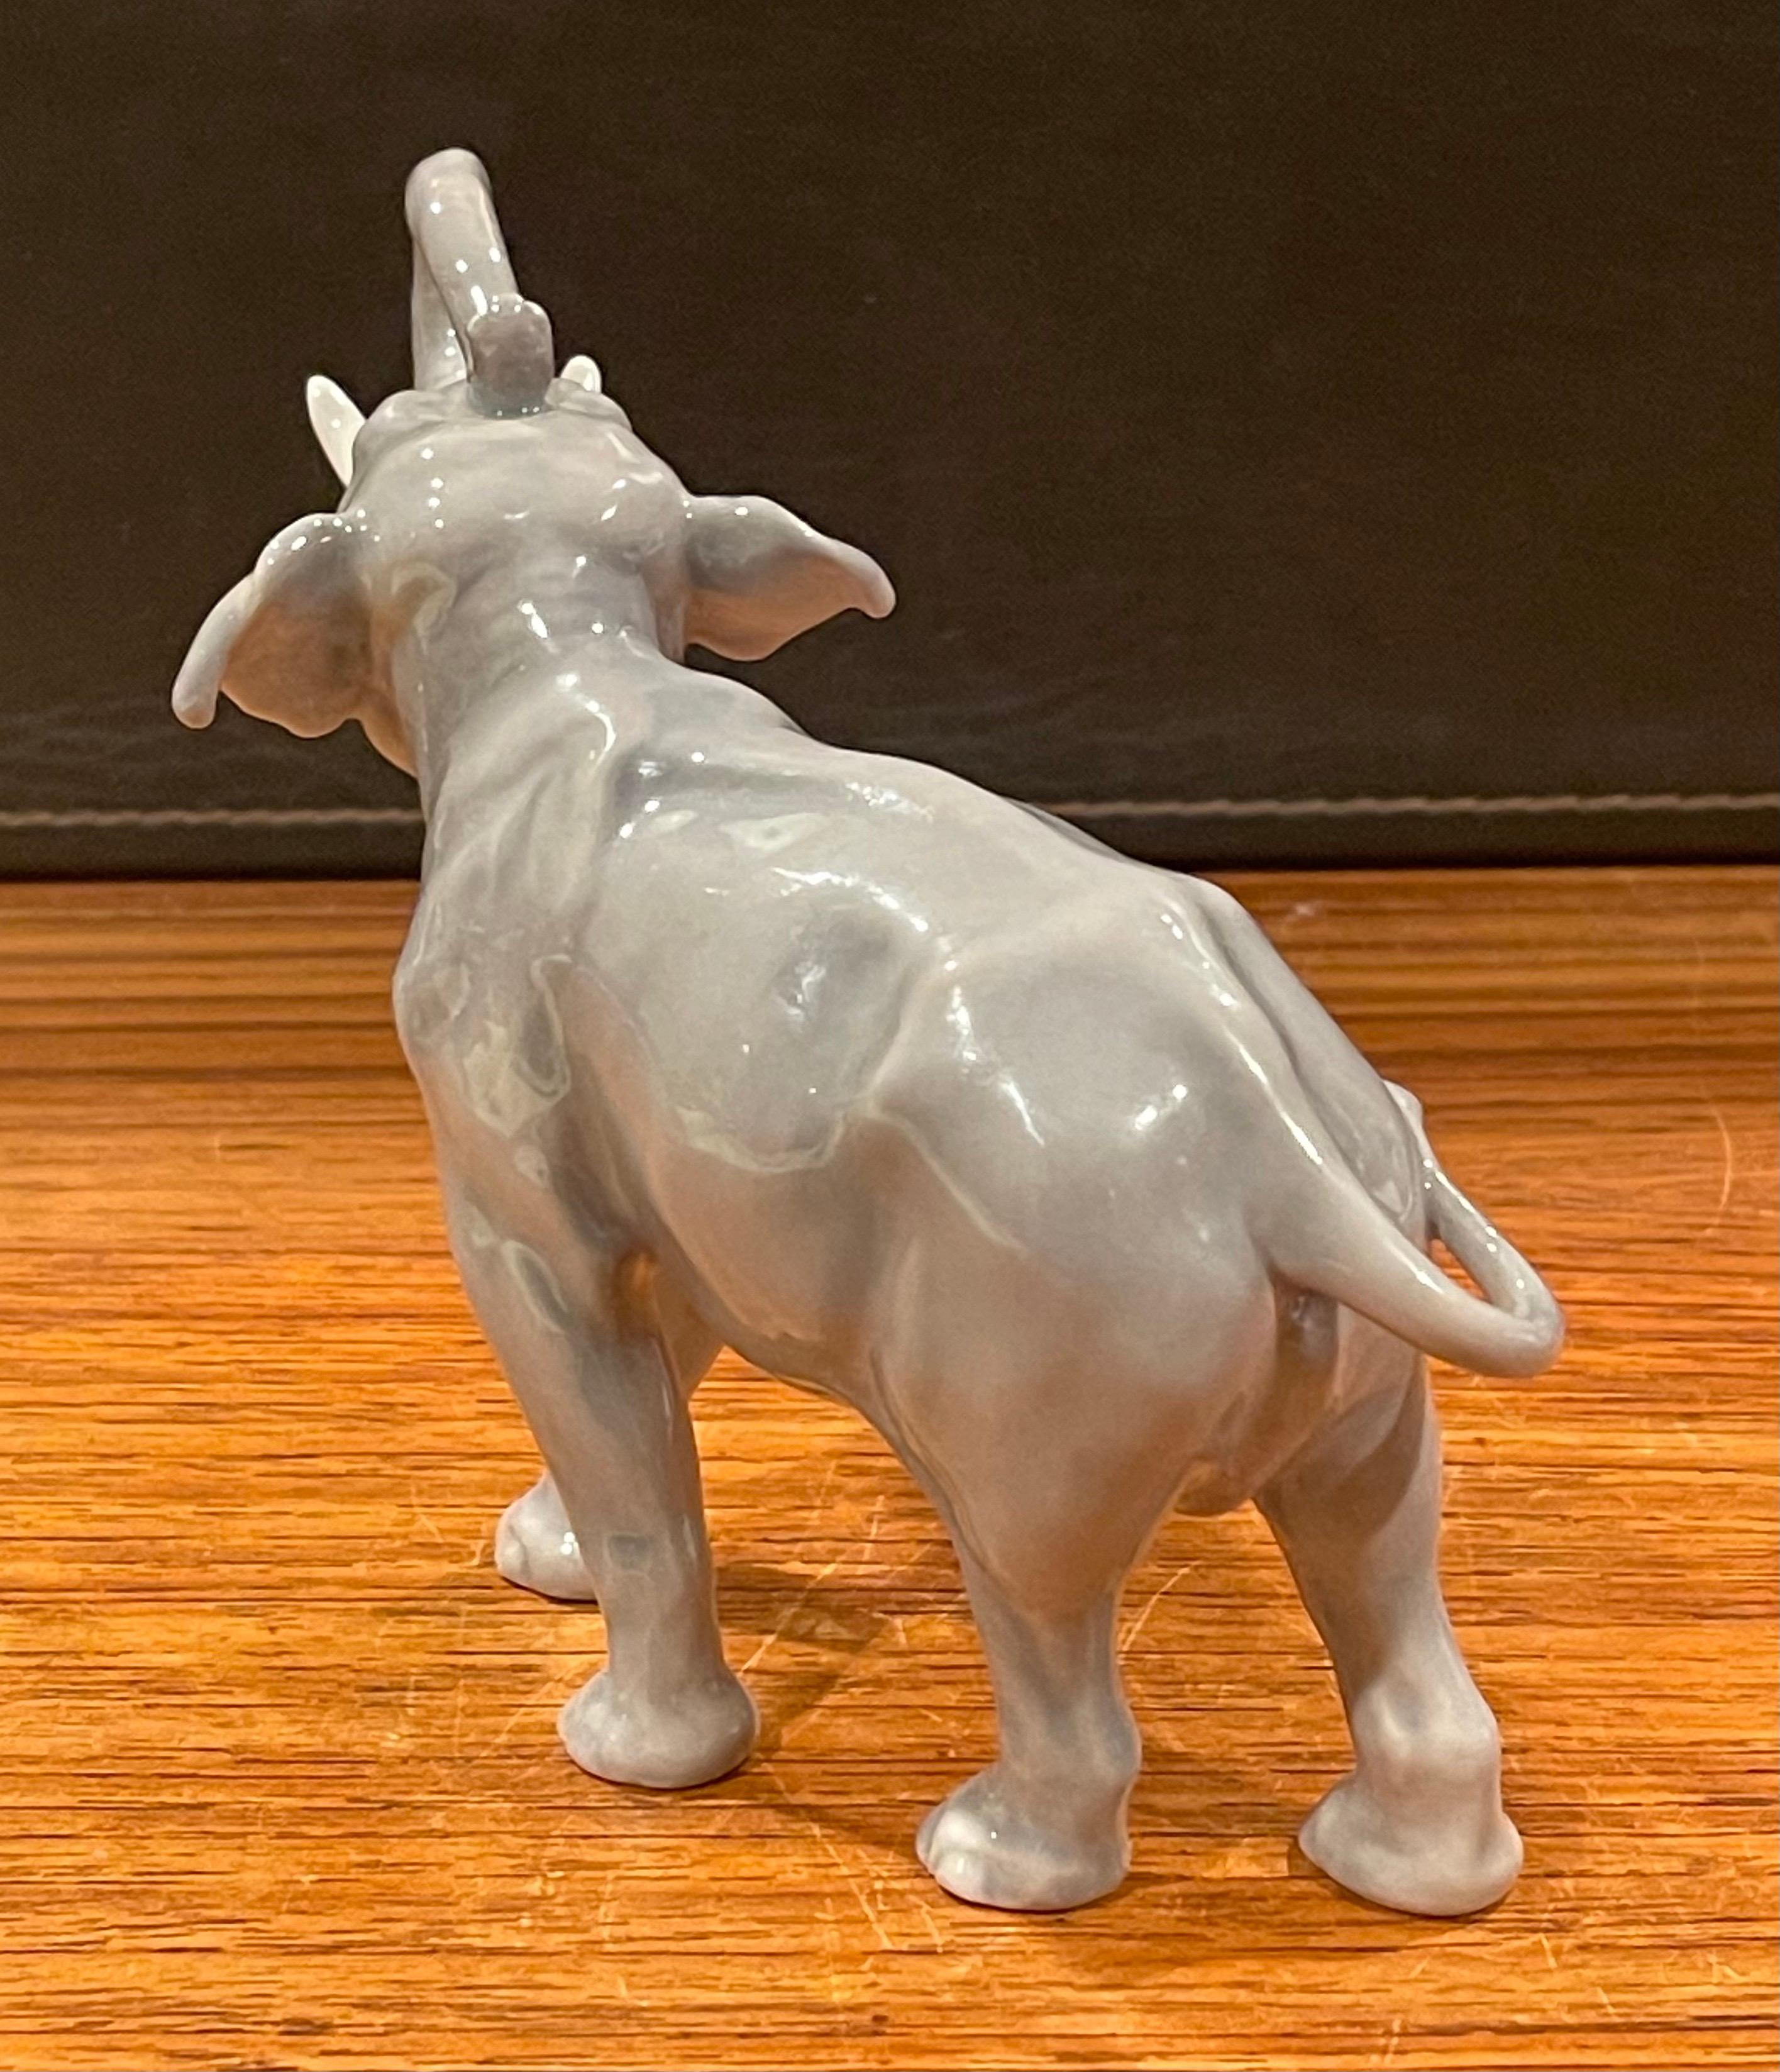 Danish Hand Painted Porcelain Elephant Sculpture by Bing & Grondahl For Sale